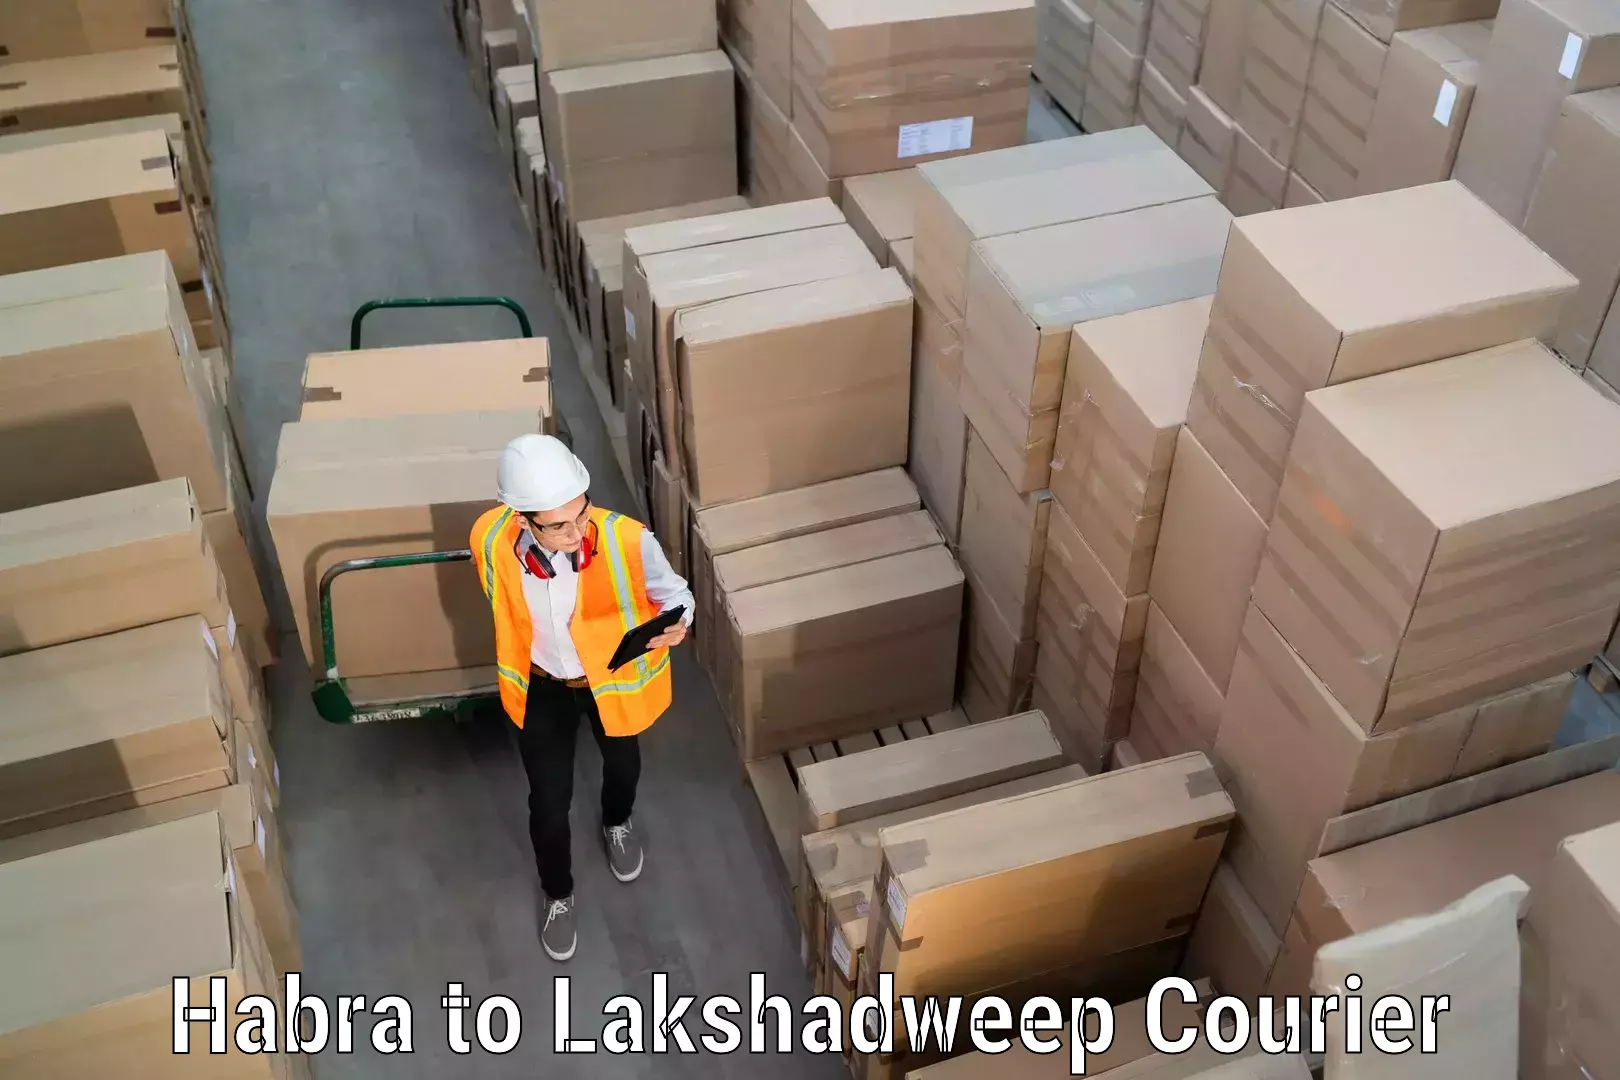 Professional moving company Habra to Lakshadweep